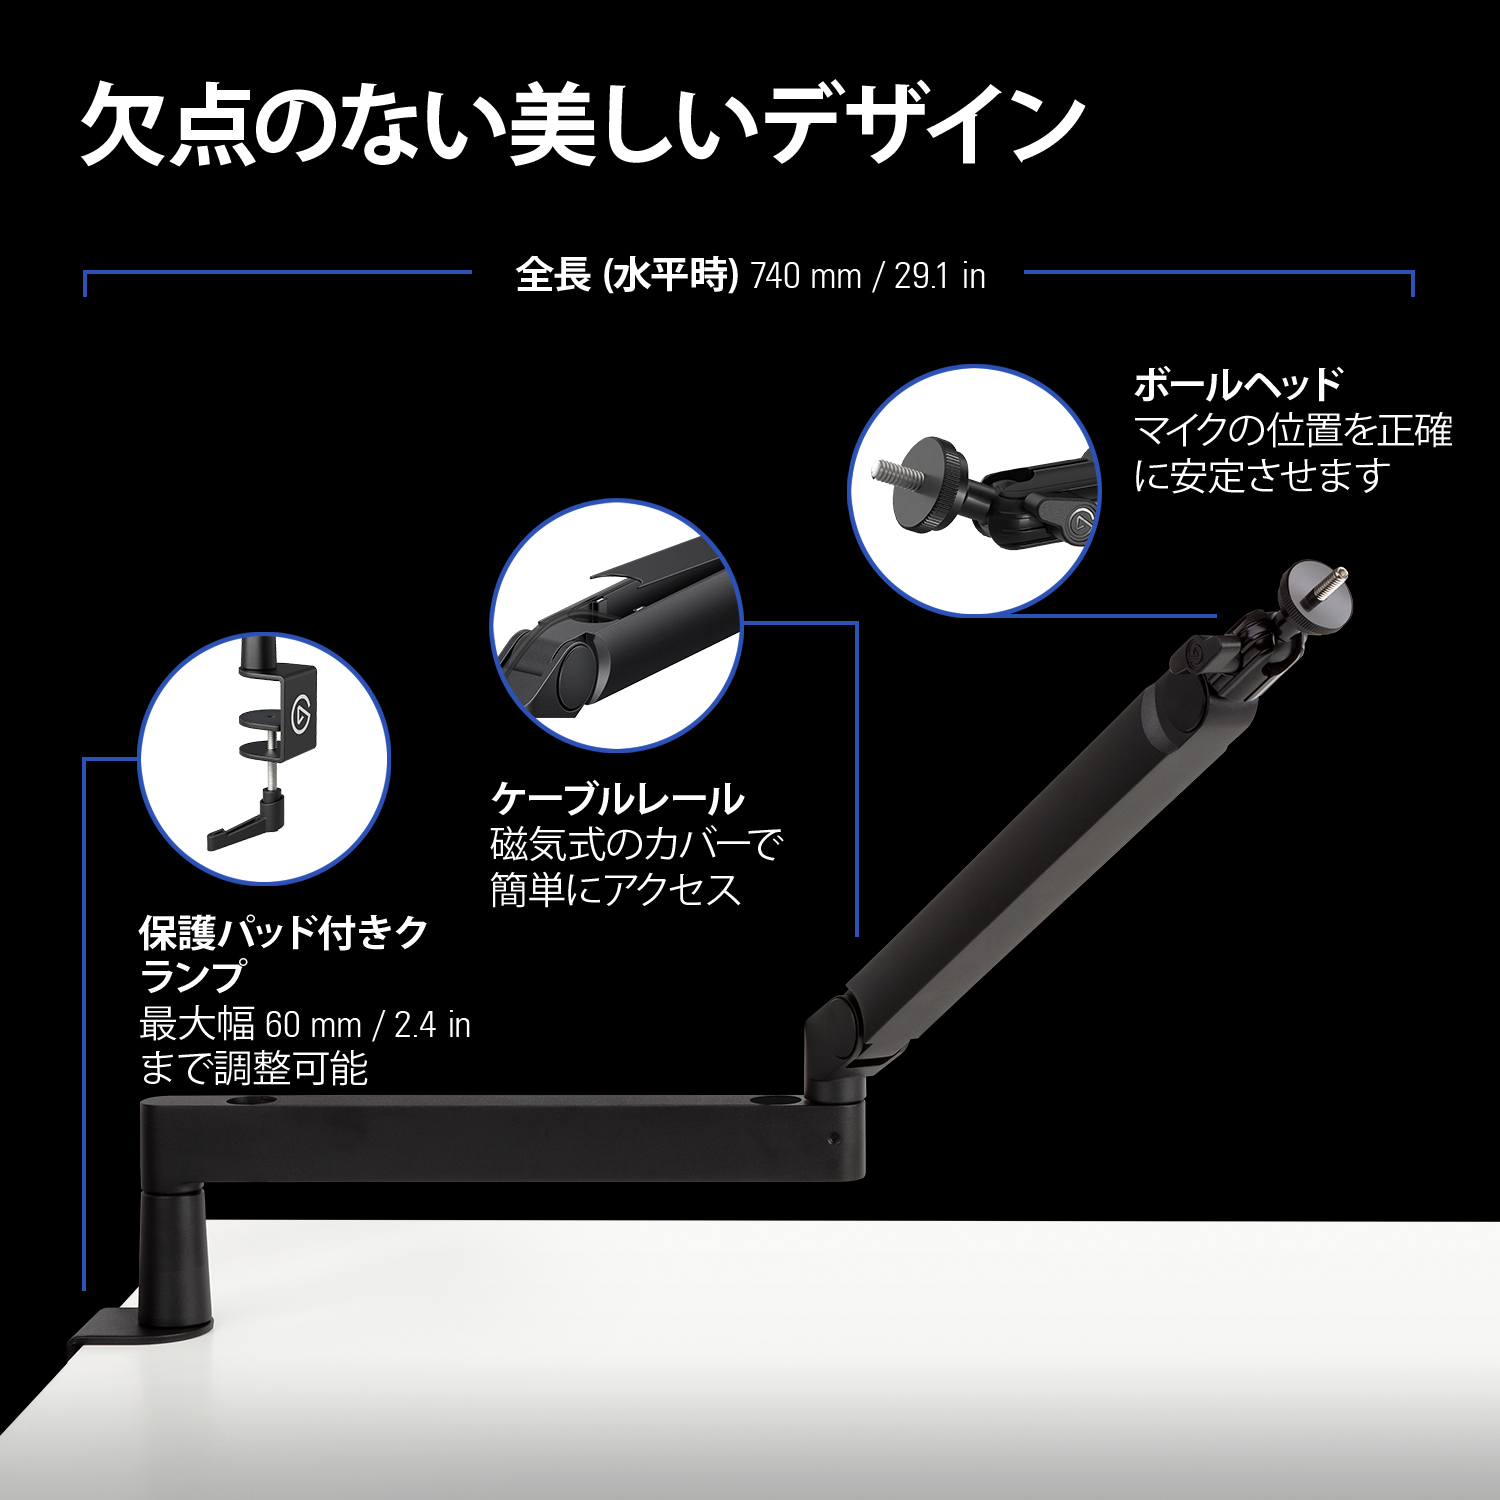 Elgato Wave Mic Arm LP 薄型デザインマイクアーム 日本語パッケージ 